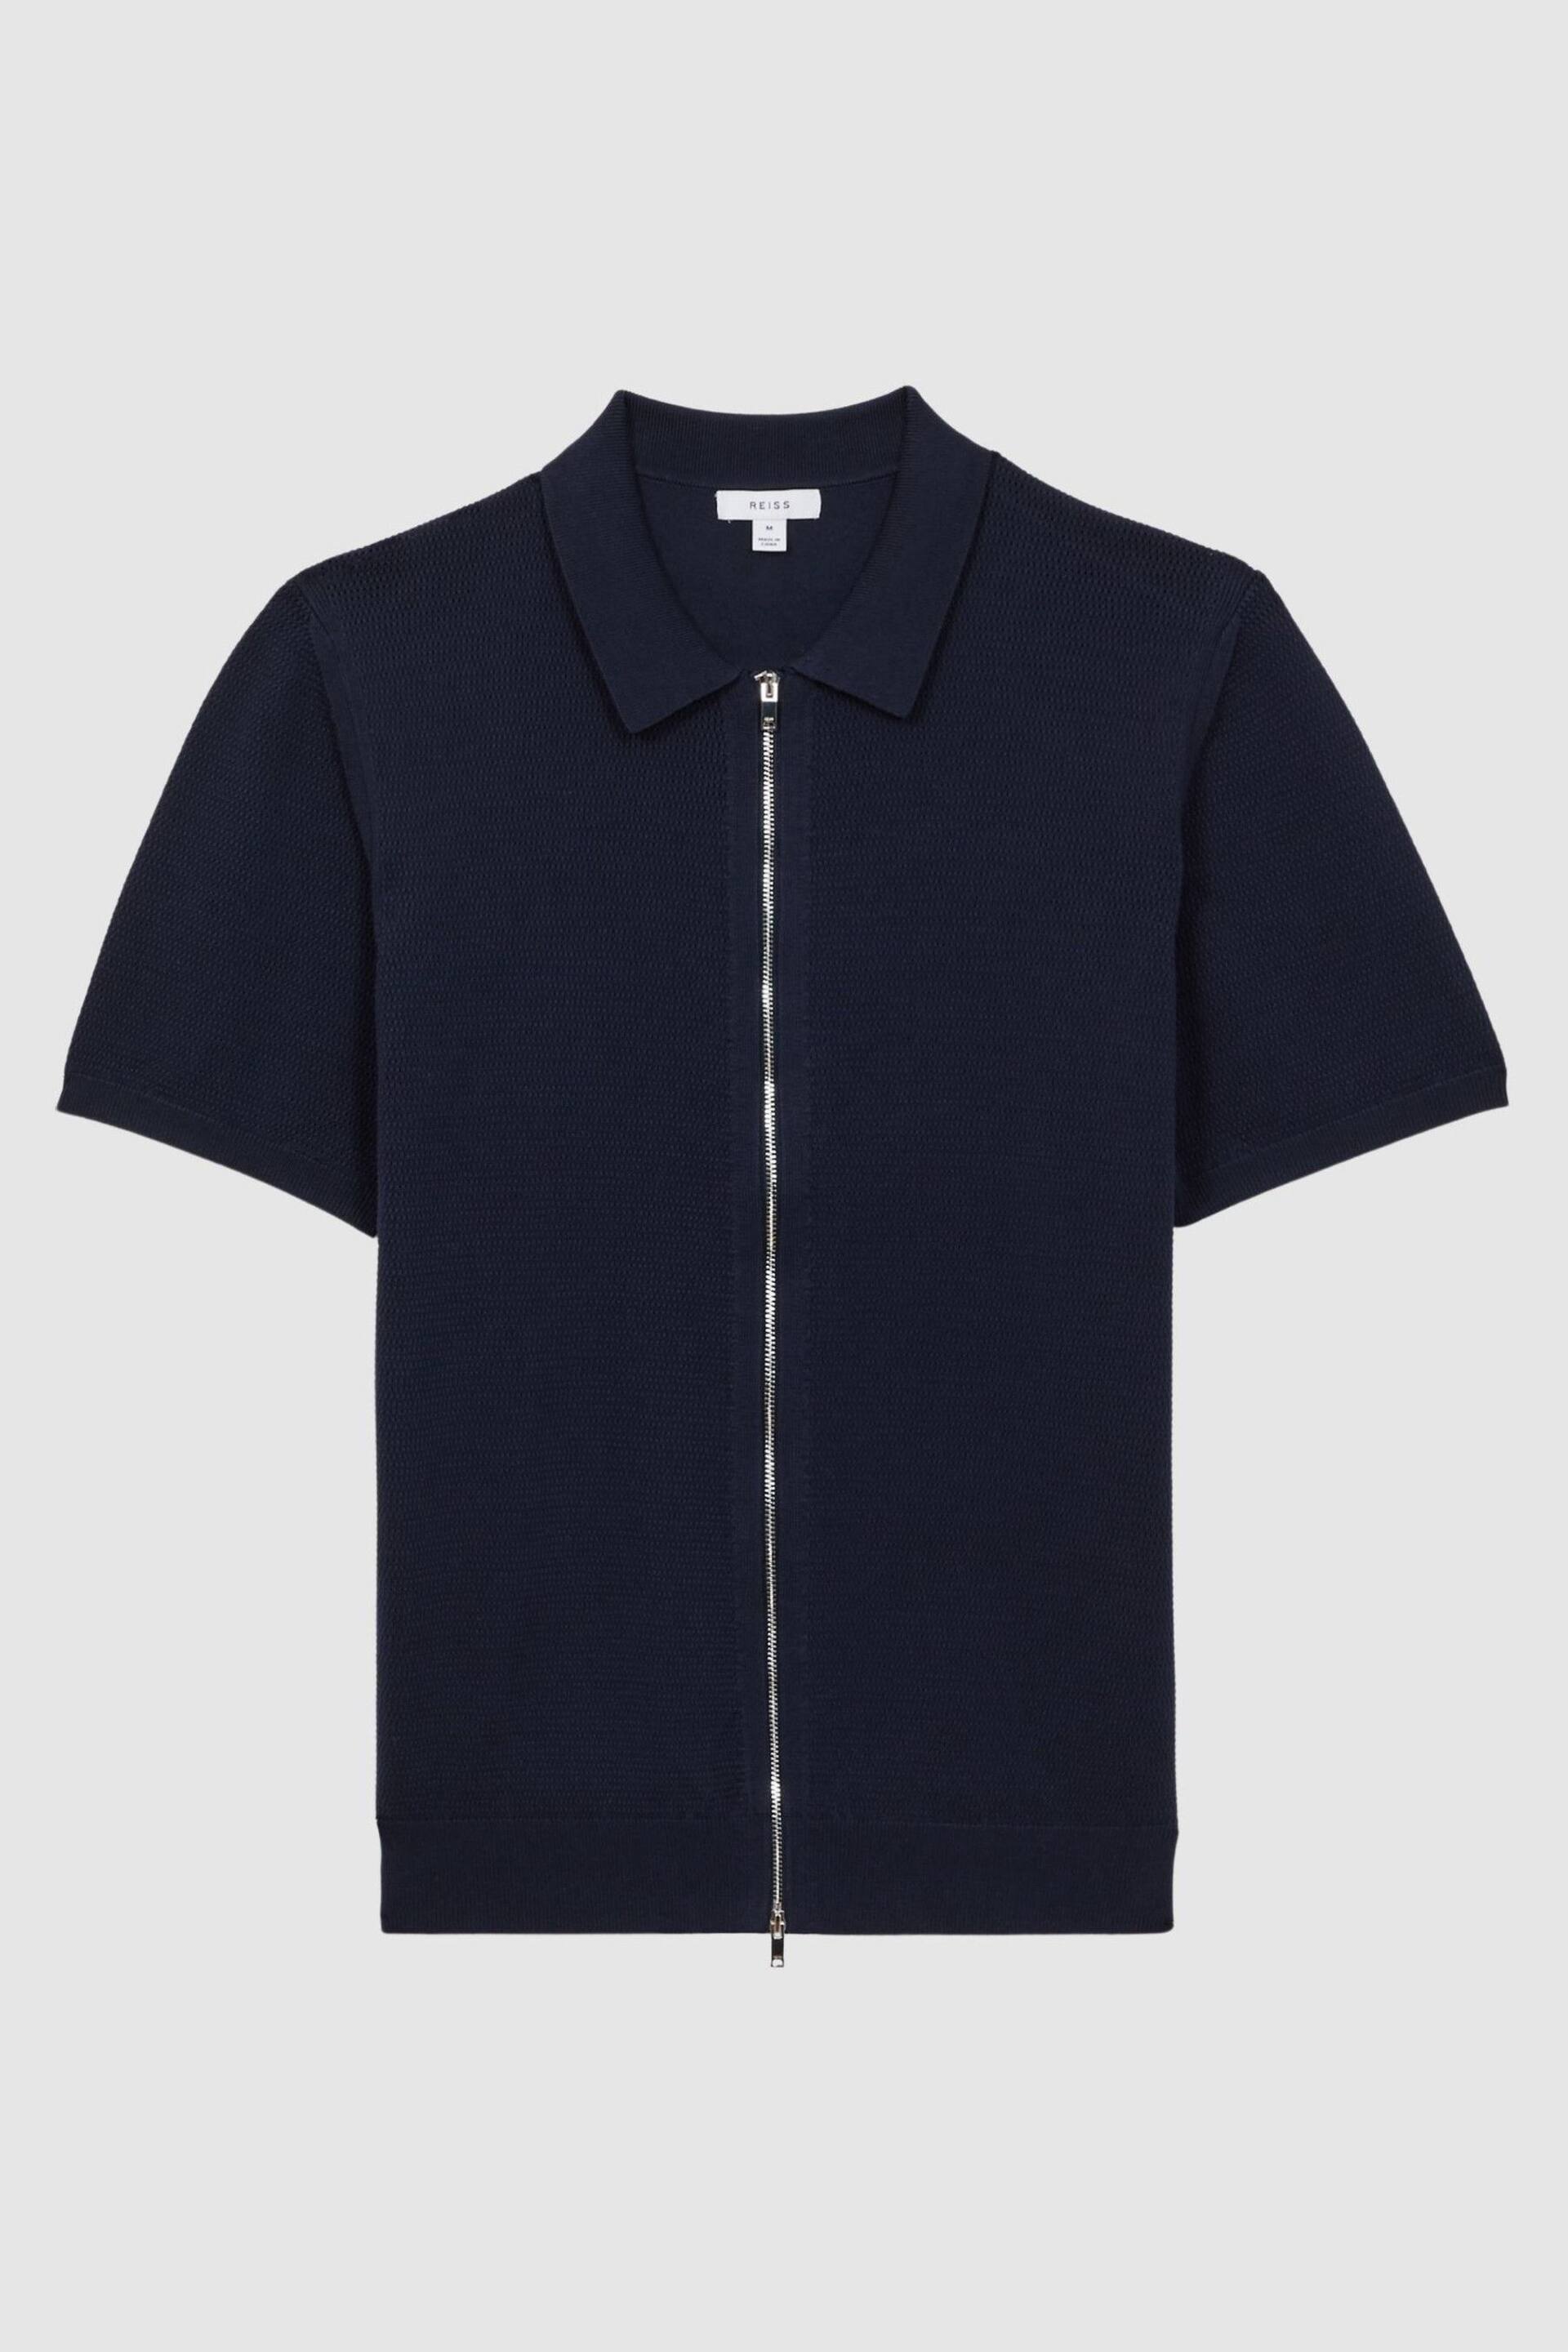 Reiss Navy Walton Slim Fit Textured Zip Through T-Shirt - Image 2 of 4